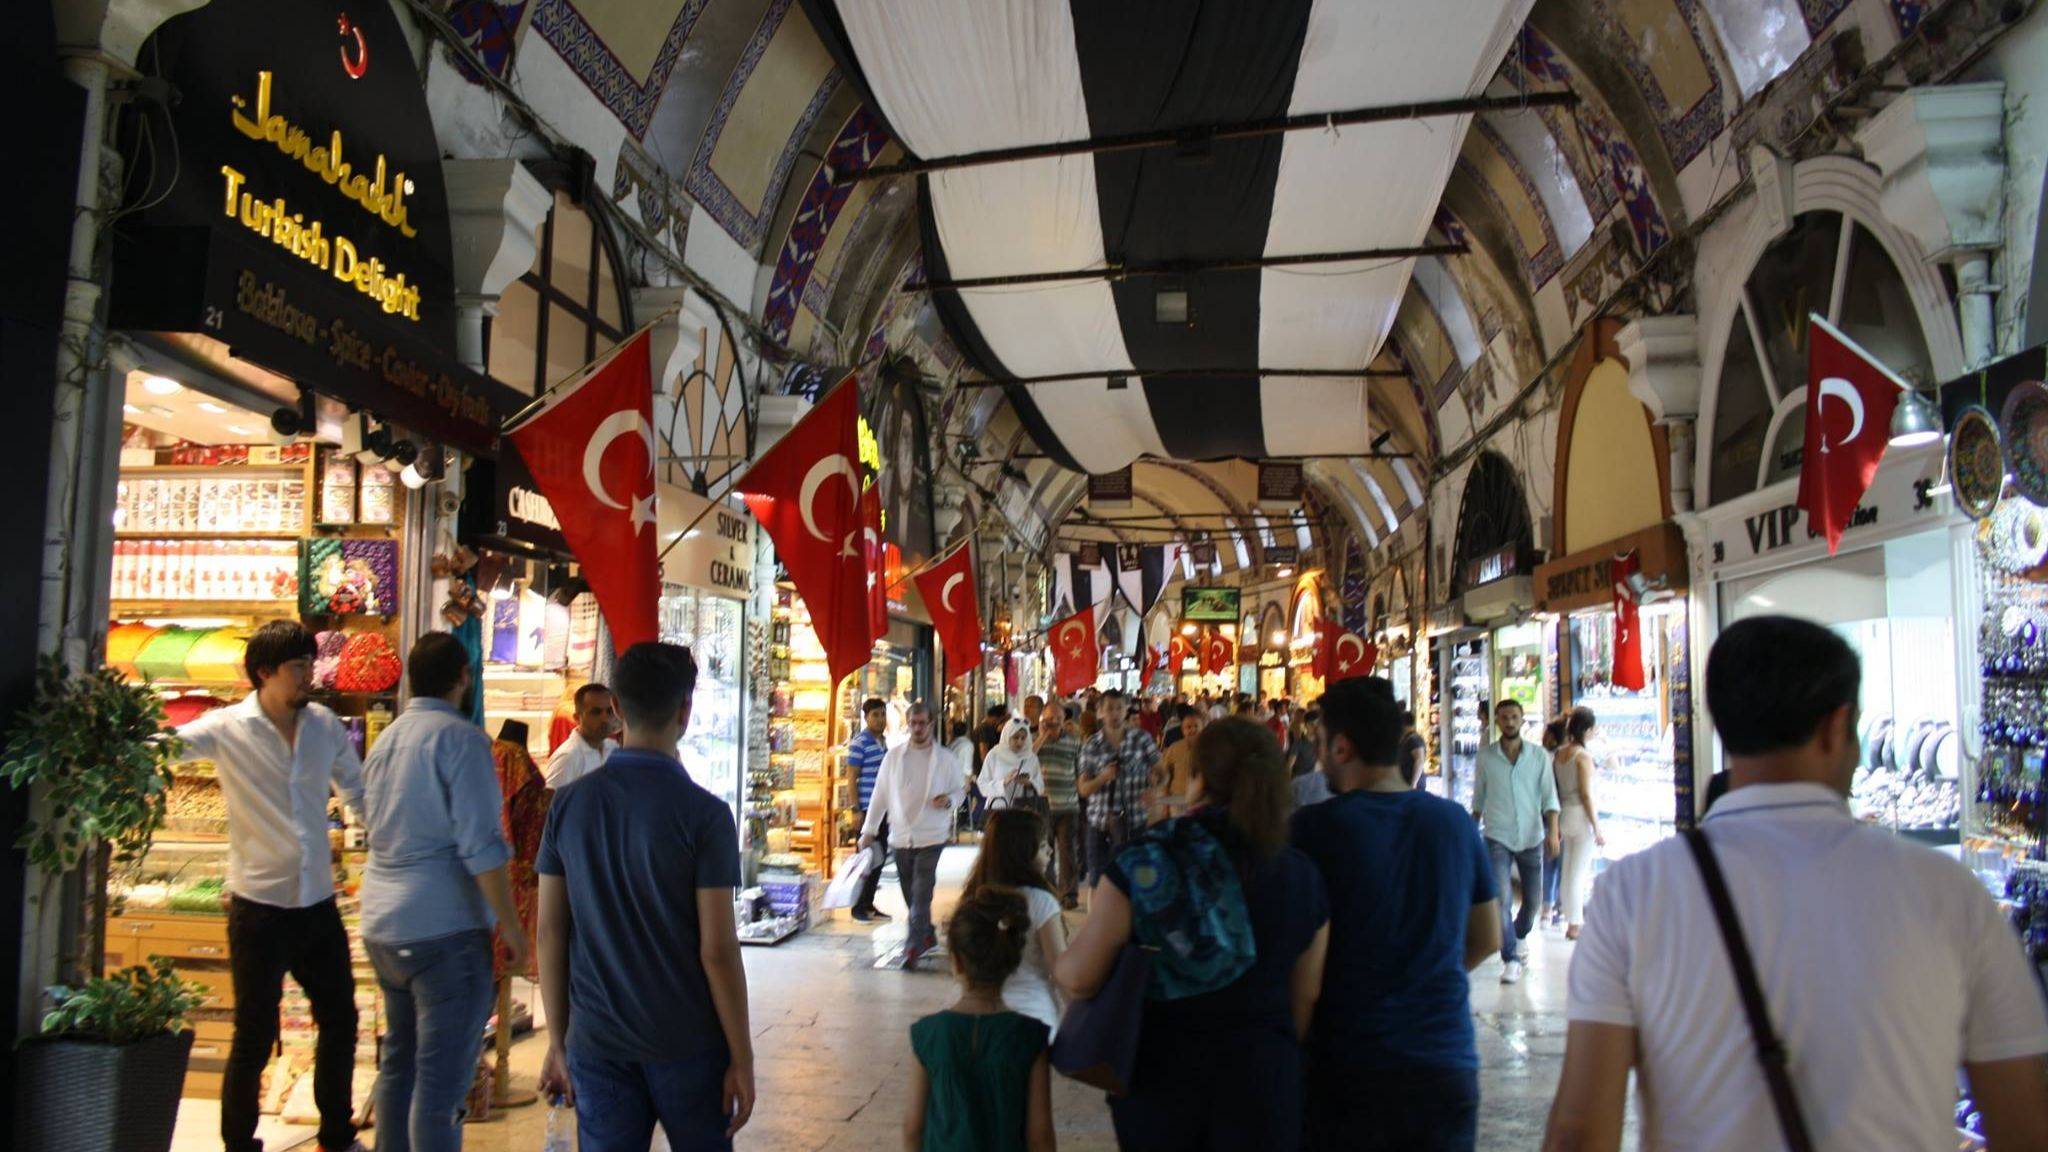 The Grand Bazaar of Istanbul, boasting 4,000 shops